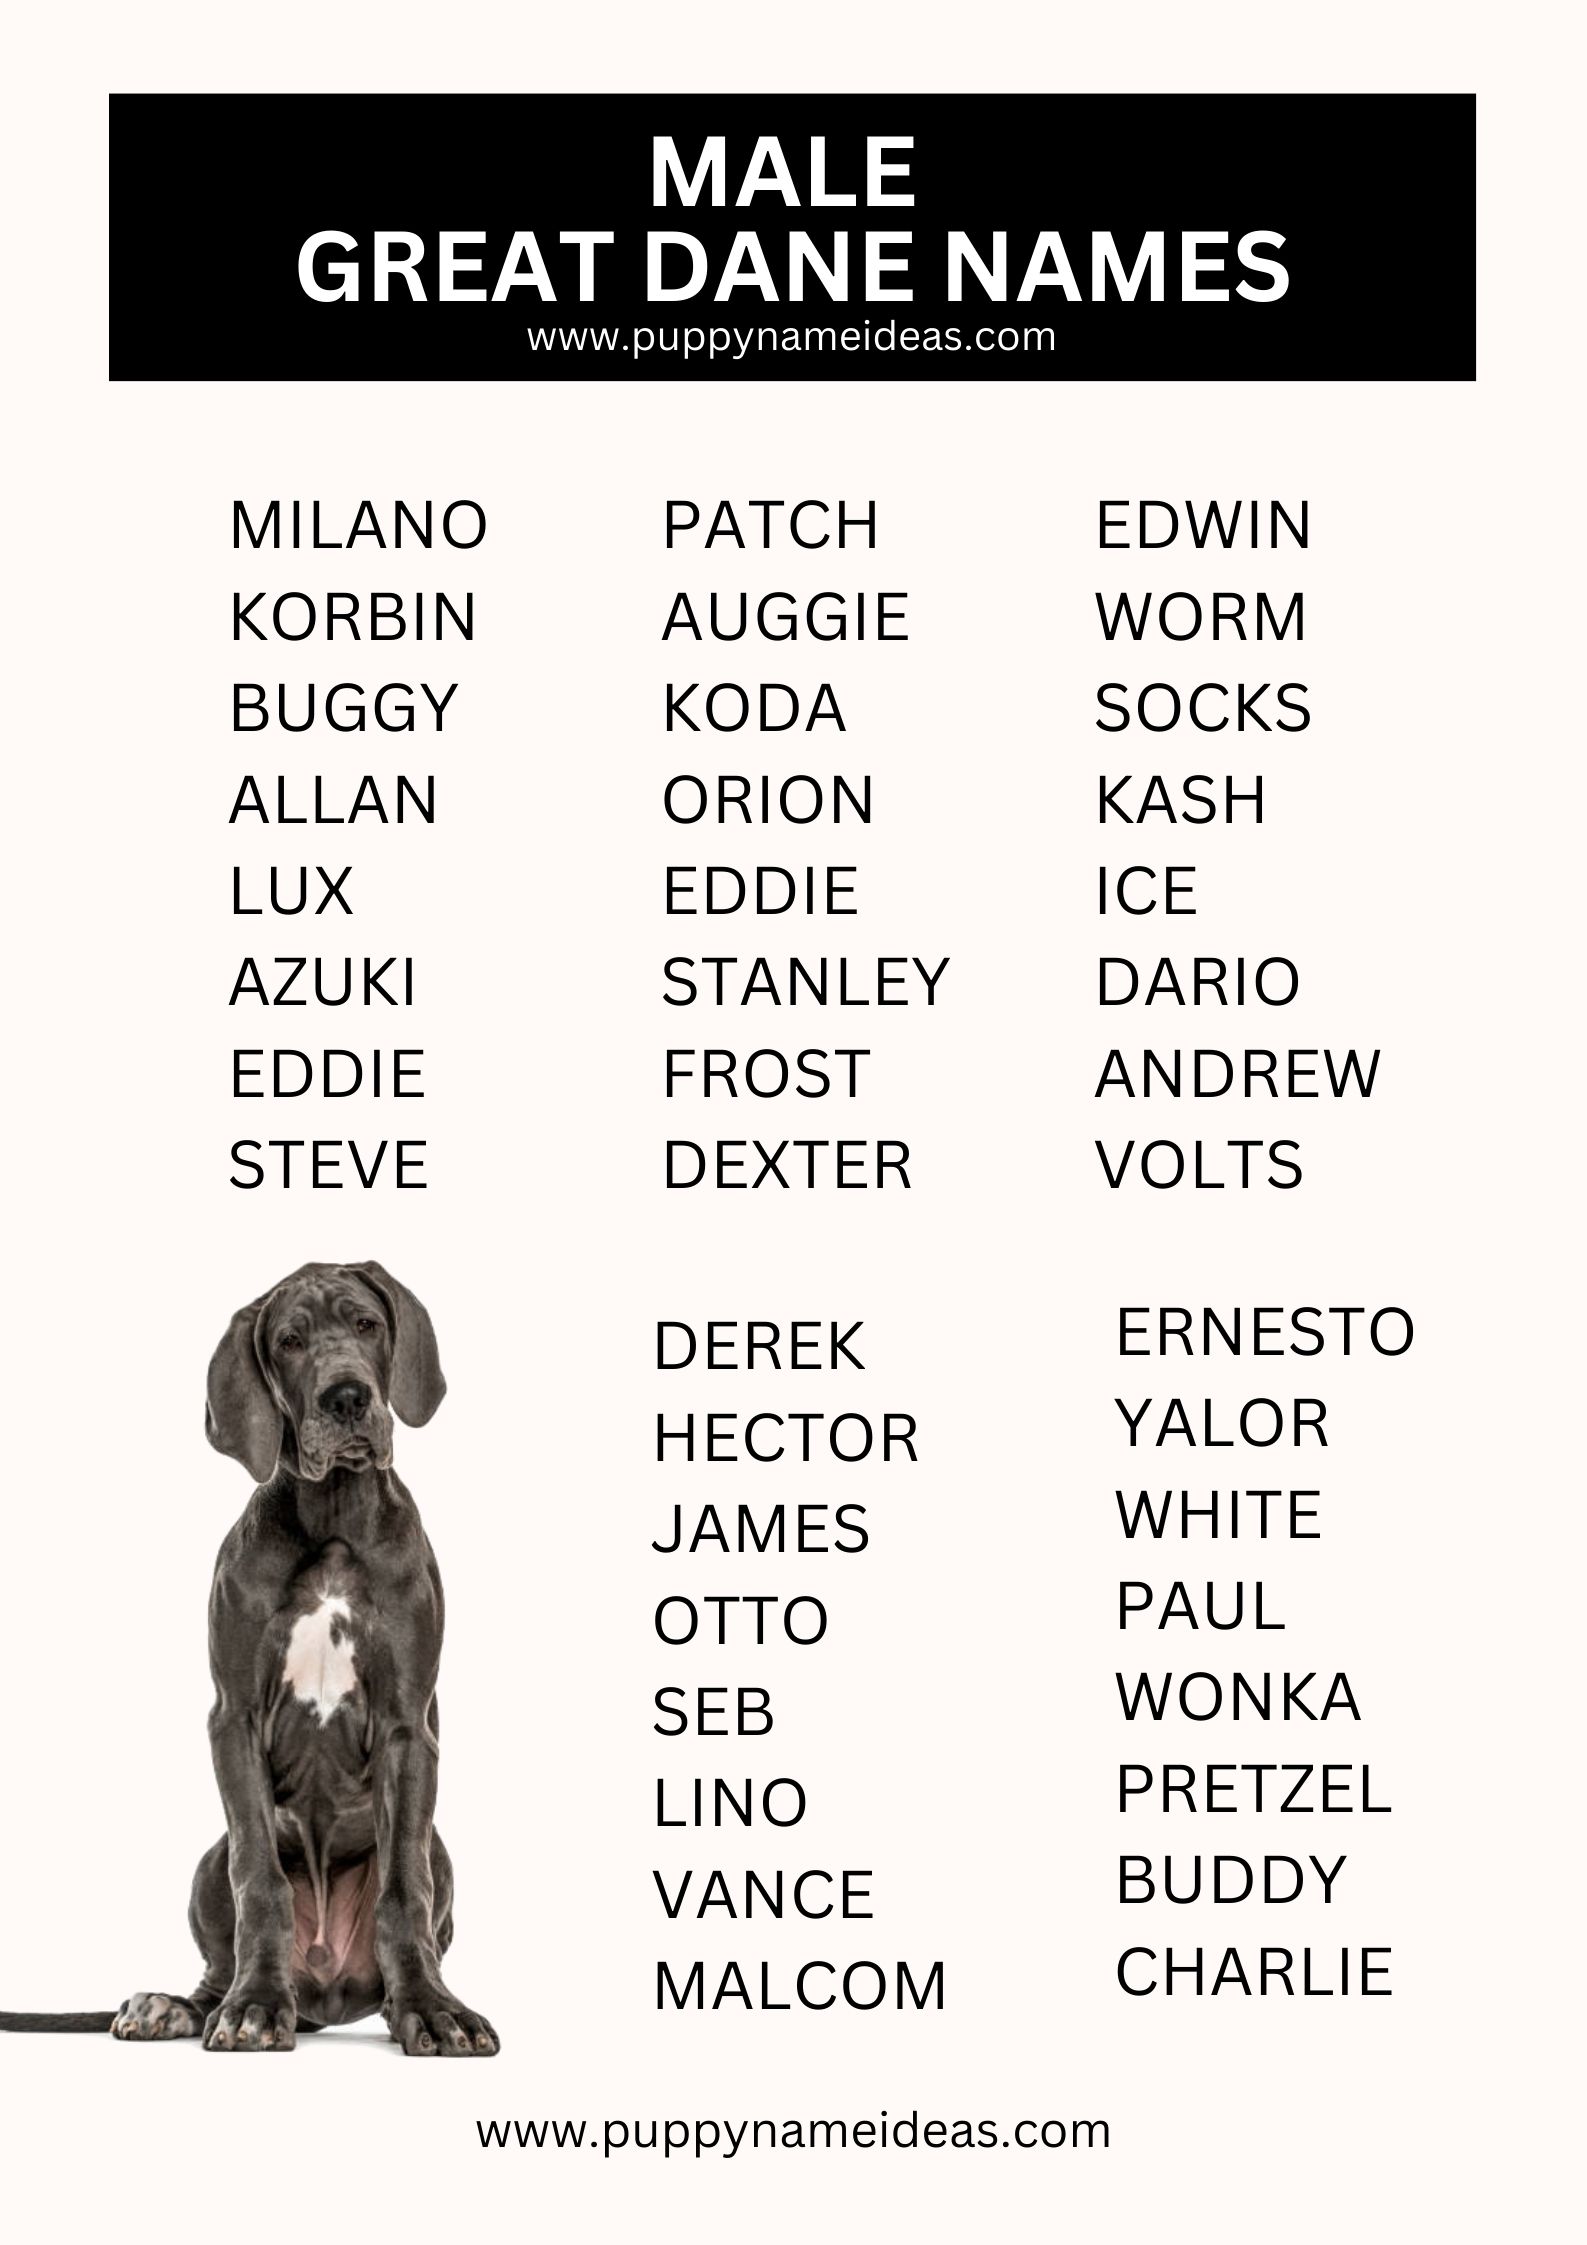 List Of Male Great Dane Names